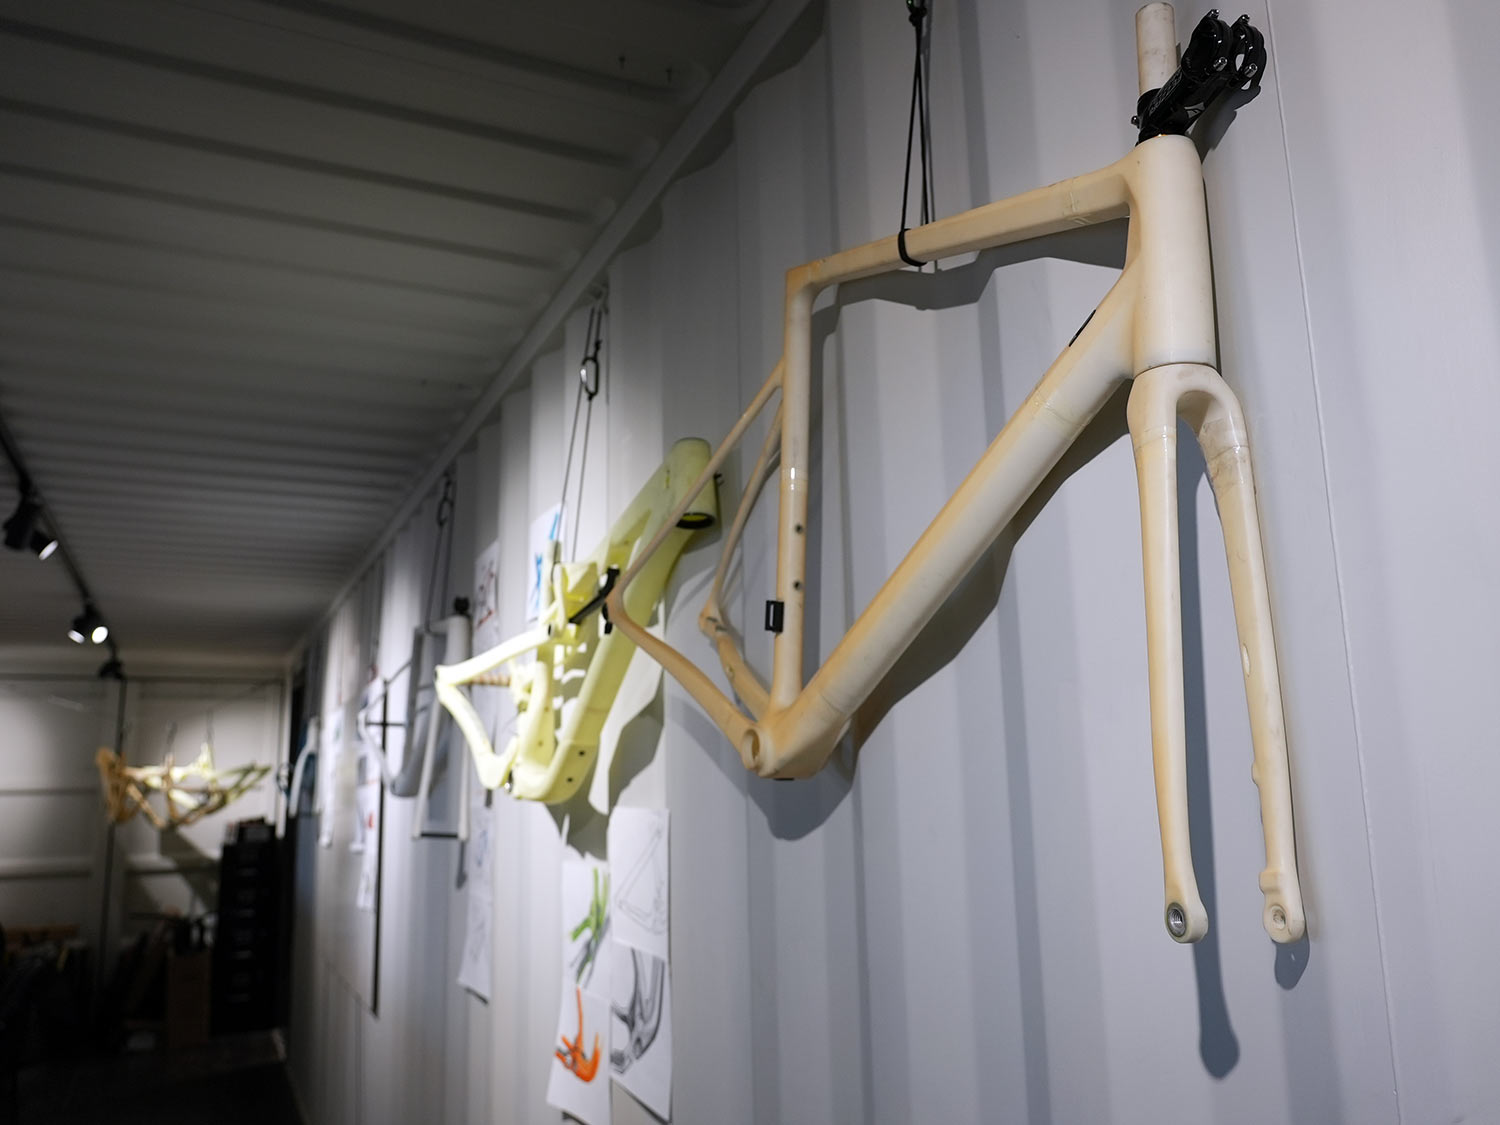 fezzari headquarters tour of 3d printed bicycle frames